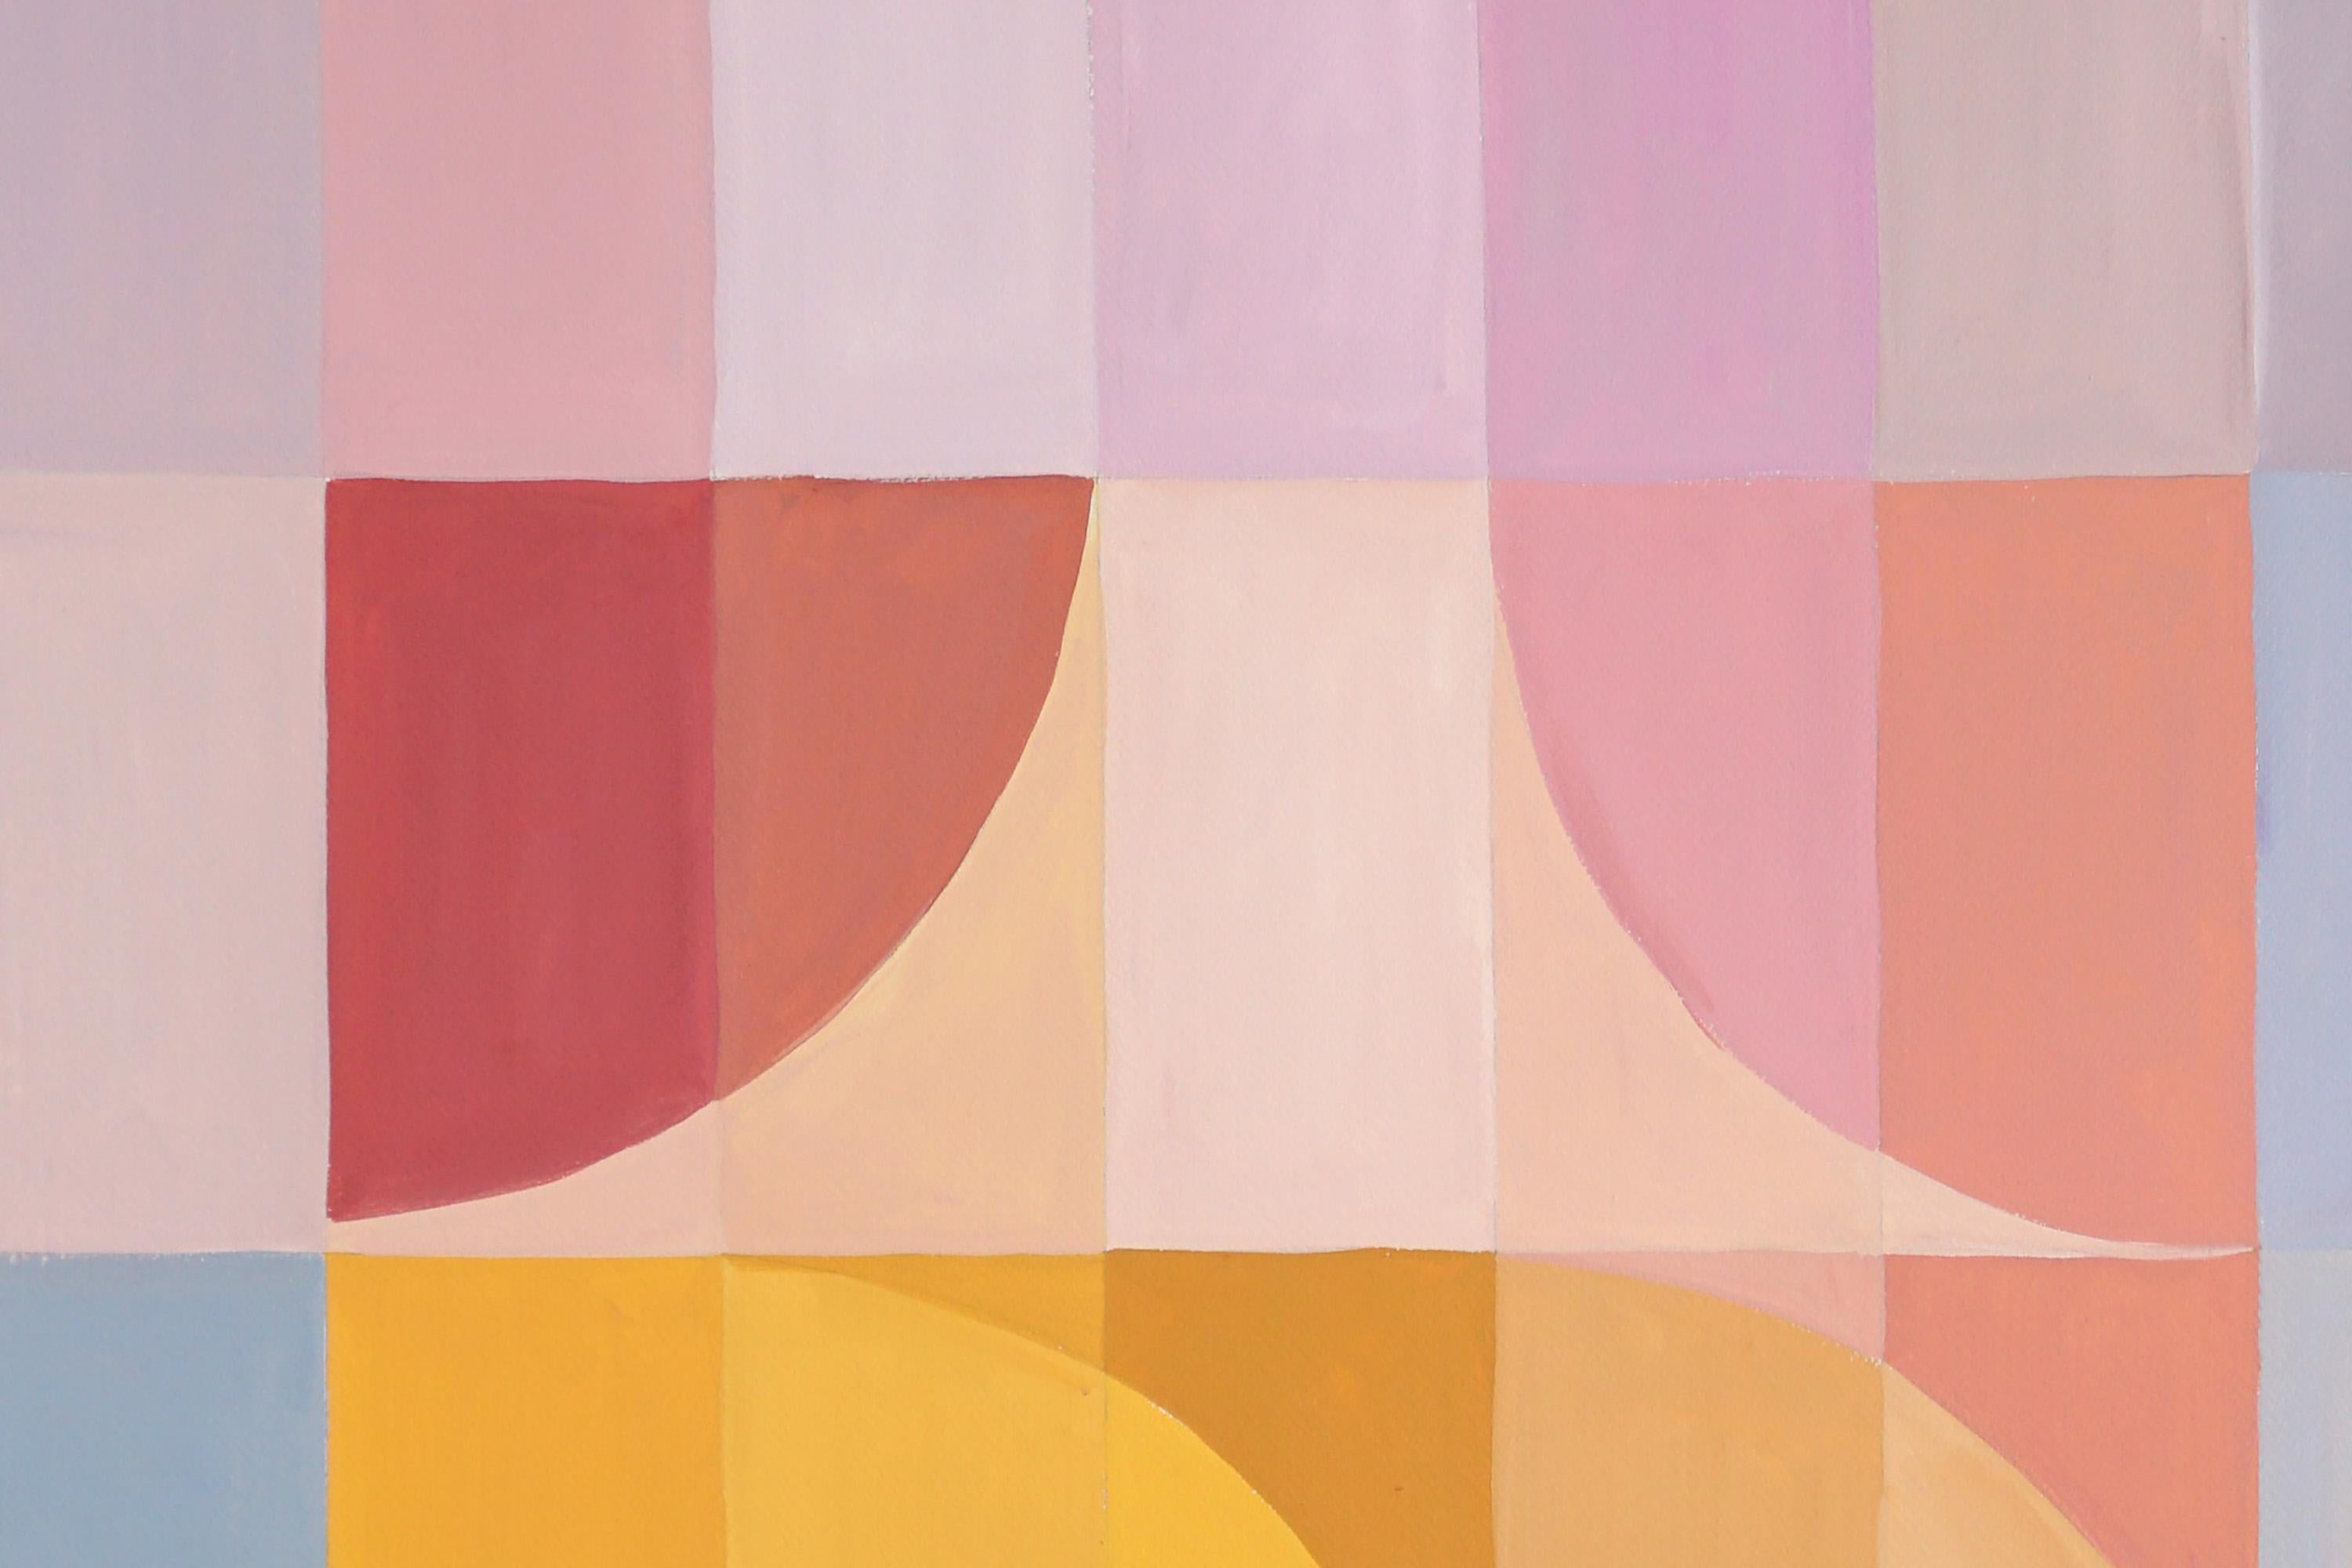 Abstract Body Through Window, Bauhaus Pattern Grid, Sandy Tones, Pale Pink   2